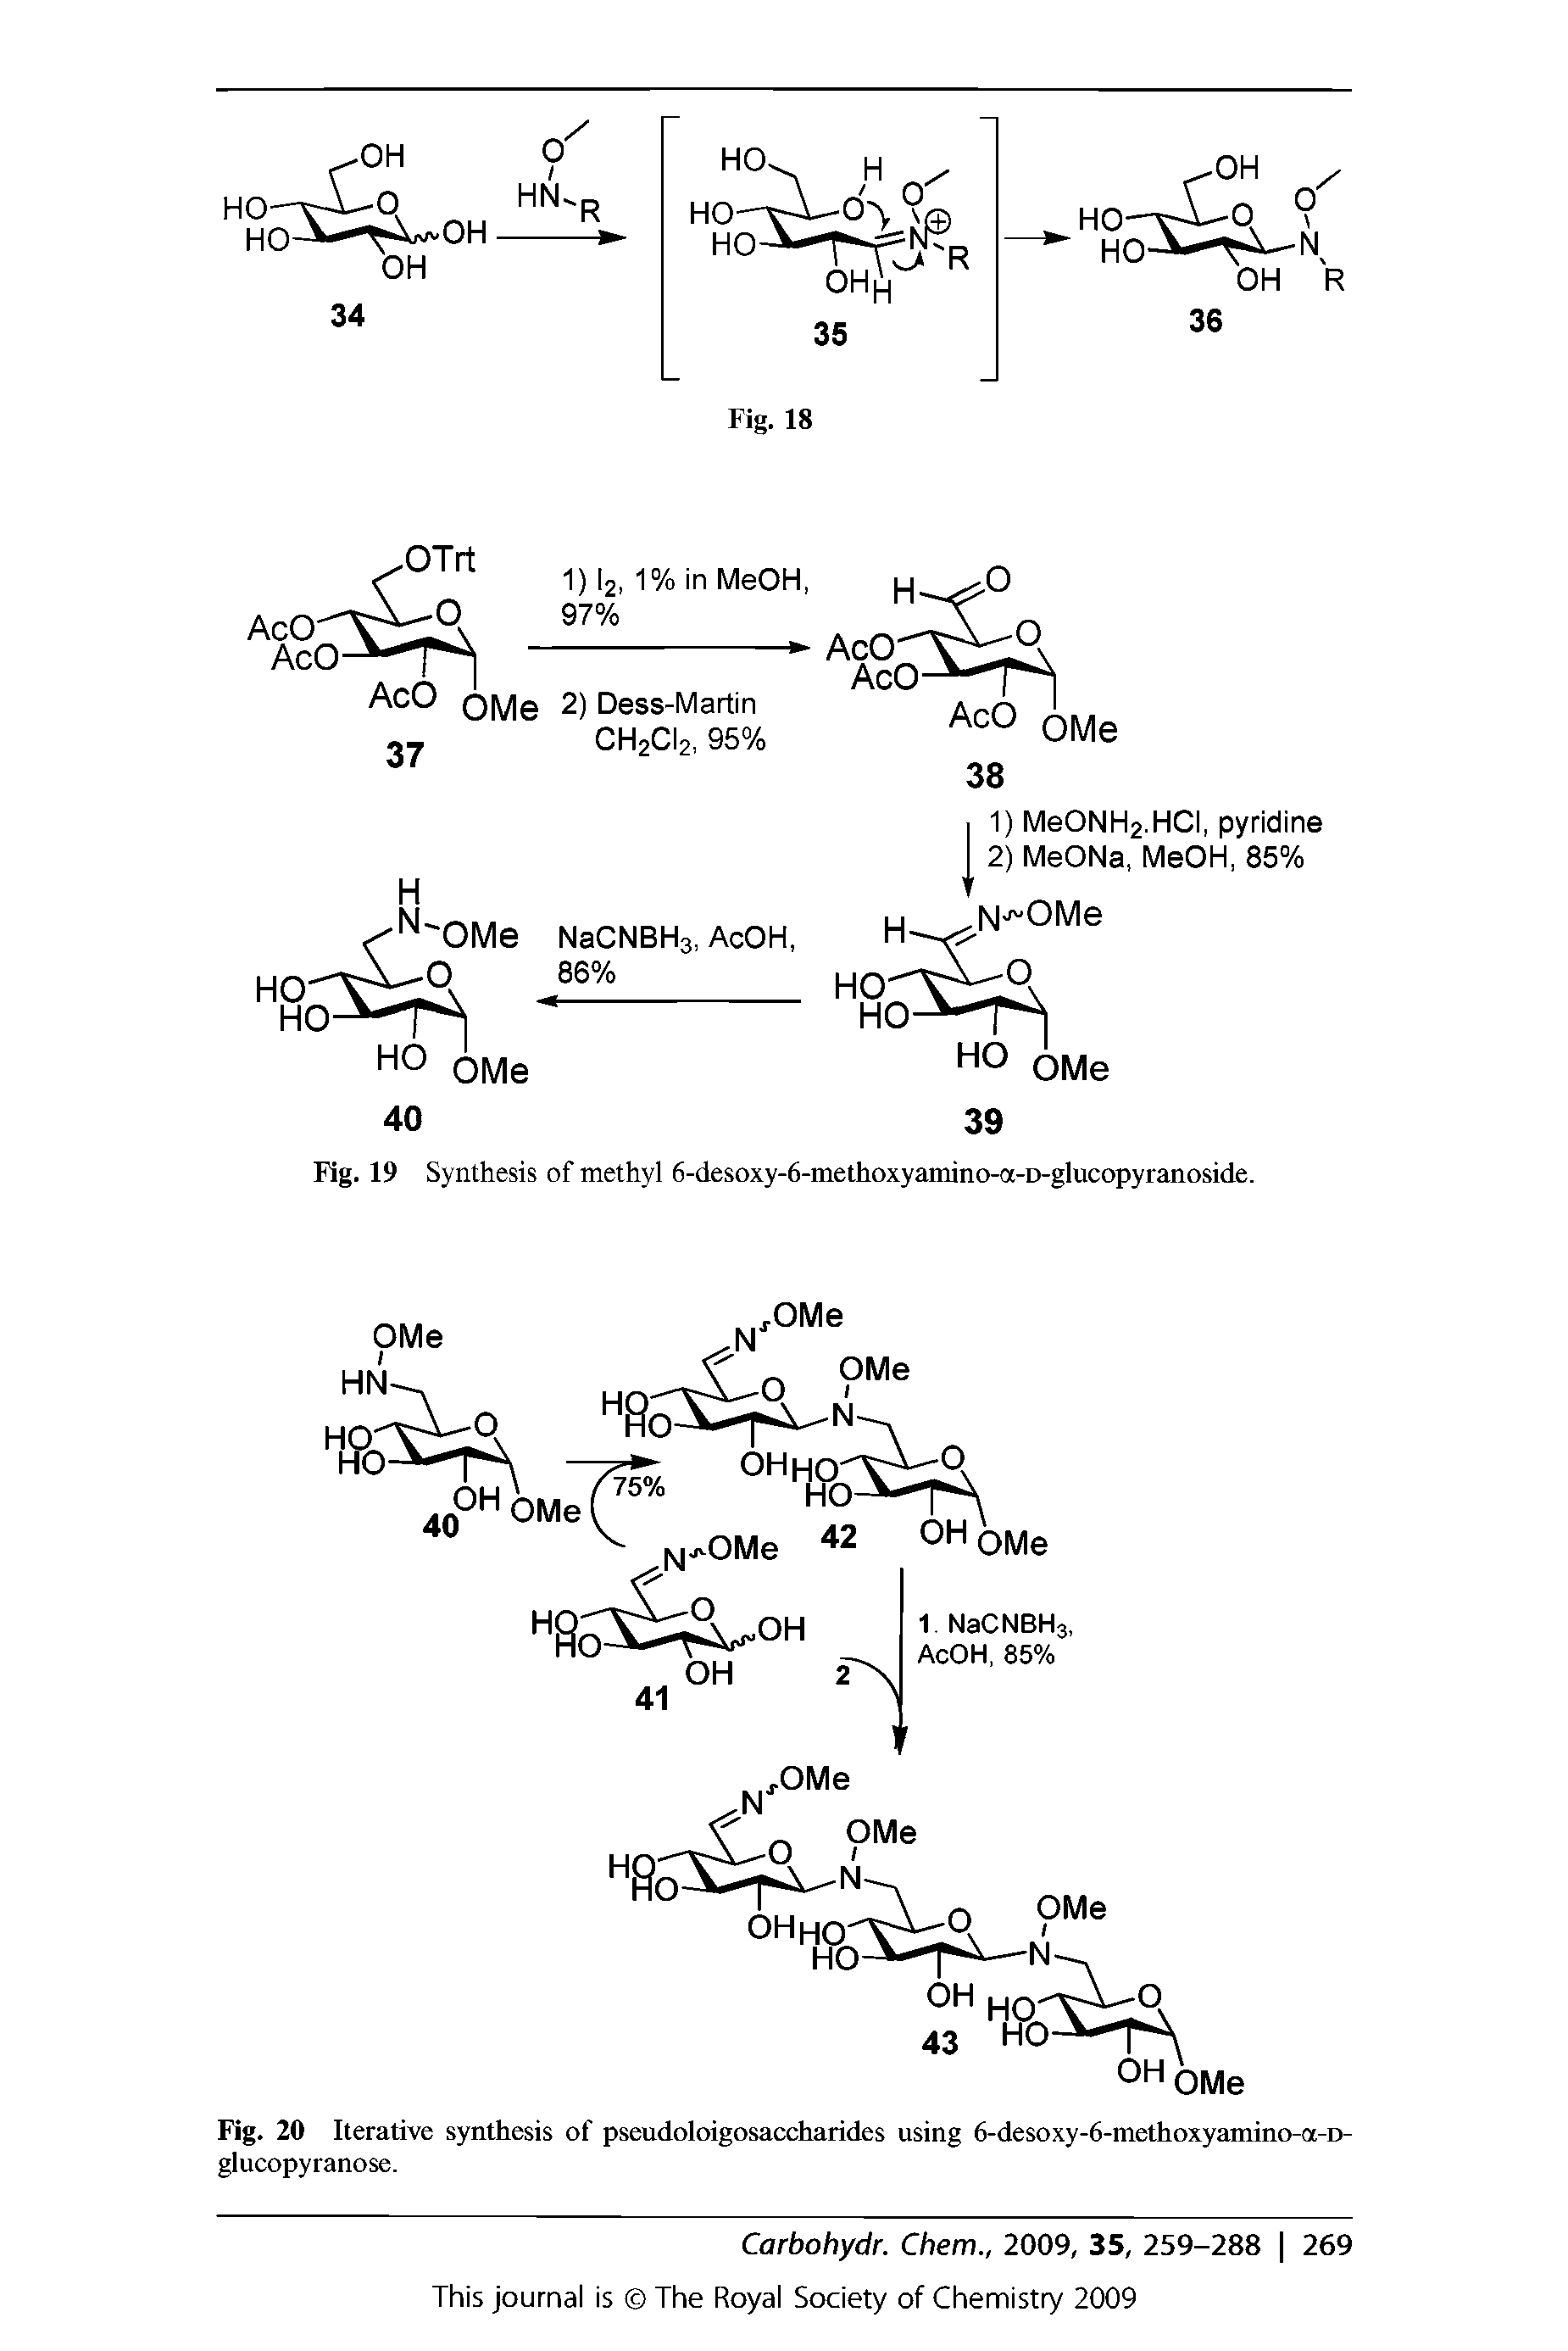 Fig. 20 Iterative synthesis of pseudoloigosaccharides using 6-desoxy-6-methoxyamino-a-D-glucopyranose.